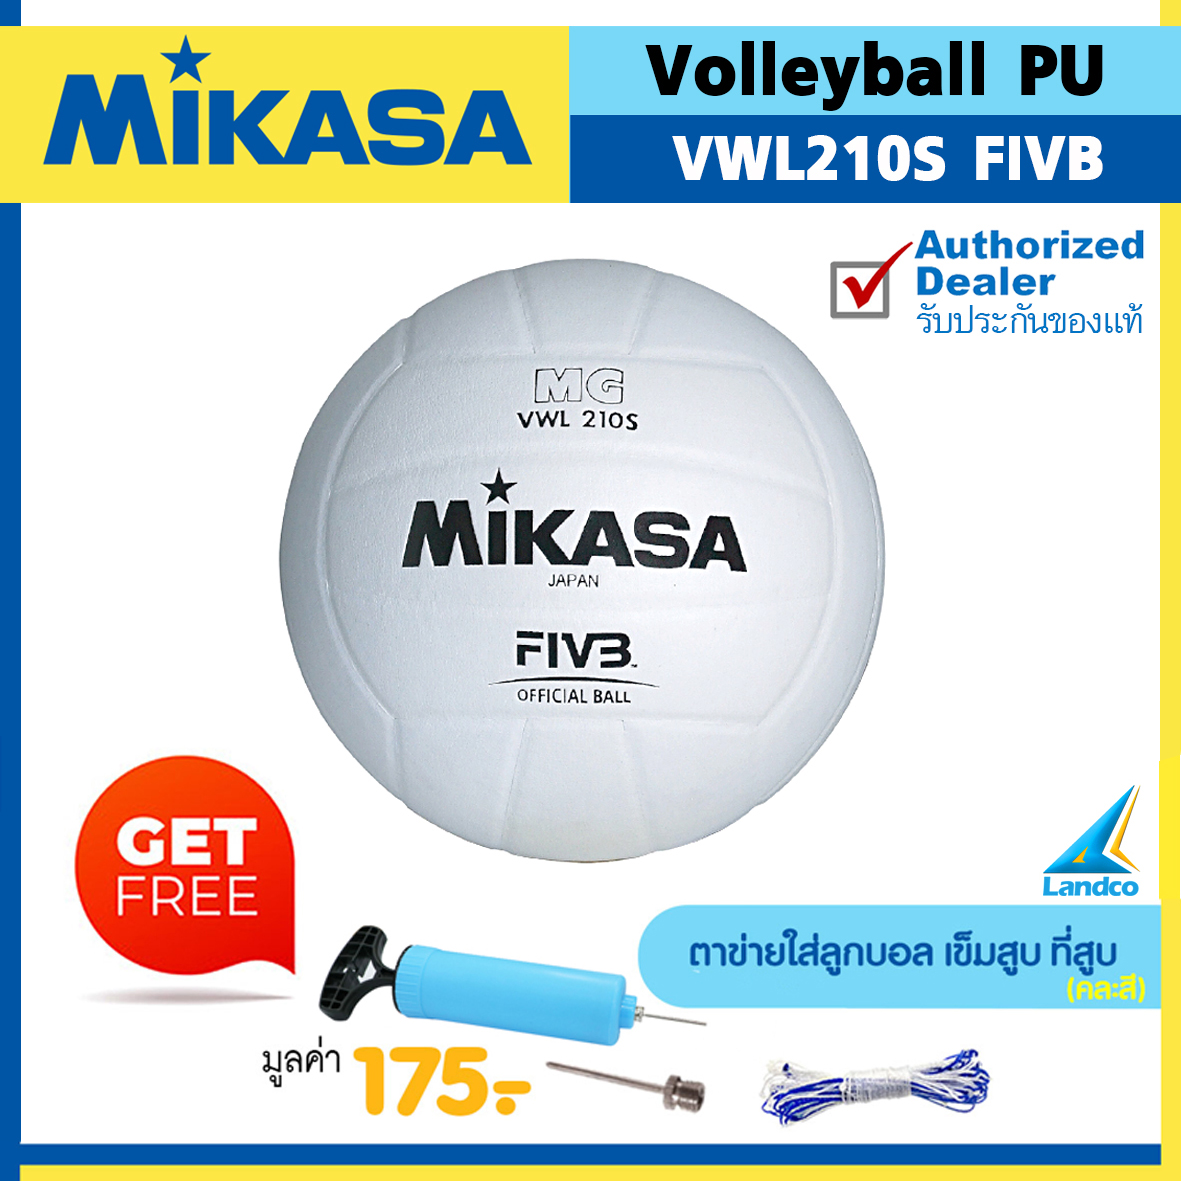 MIKASA ลูกวอลเลย์บอลหนัง Volleyball PU#5 th VWL210S FIVB(840) (แถมฟรี ตาข่ายใส่ลูกบอล + เข็มสูบ + สูบลมมือ SPL)